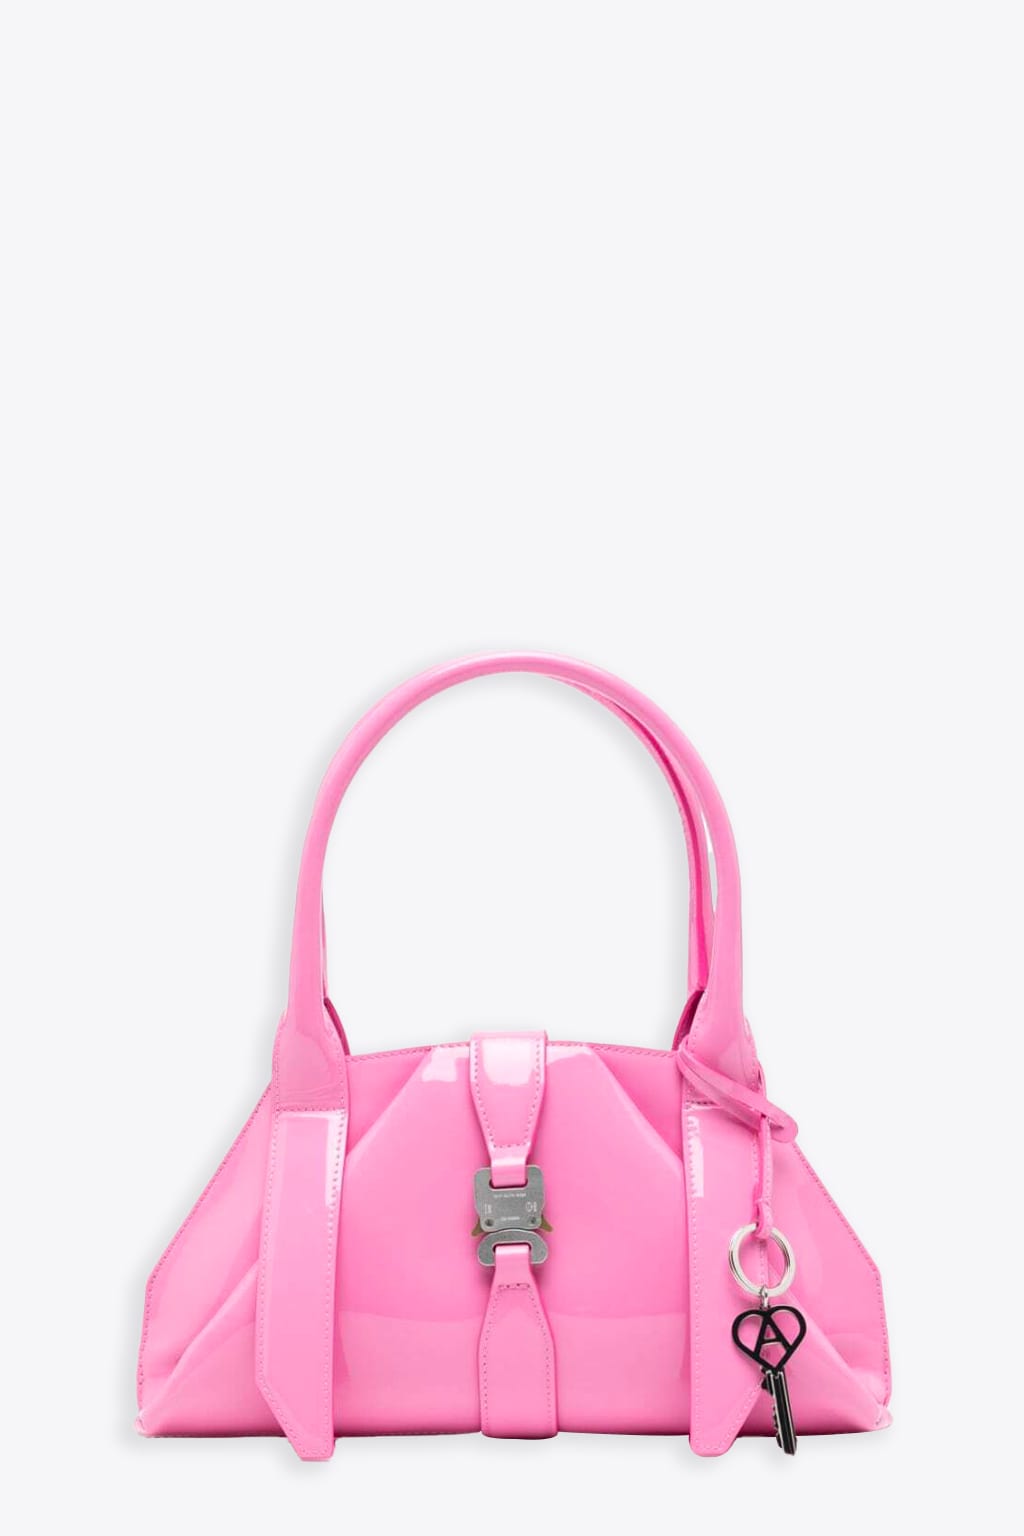 1017 ALYX 9SM Alba Bag With Charm Pink patent bag with metal charm - Alba bag with charm